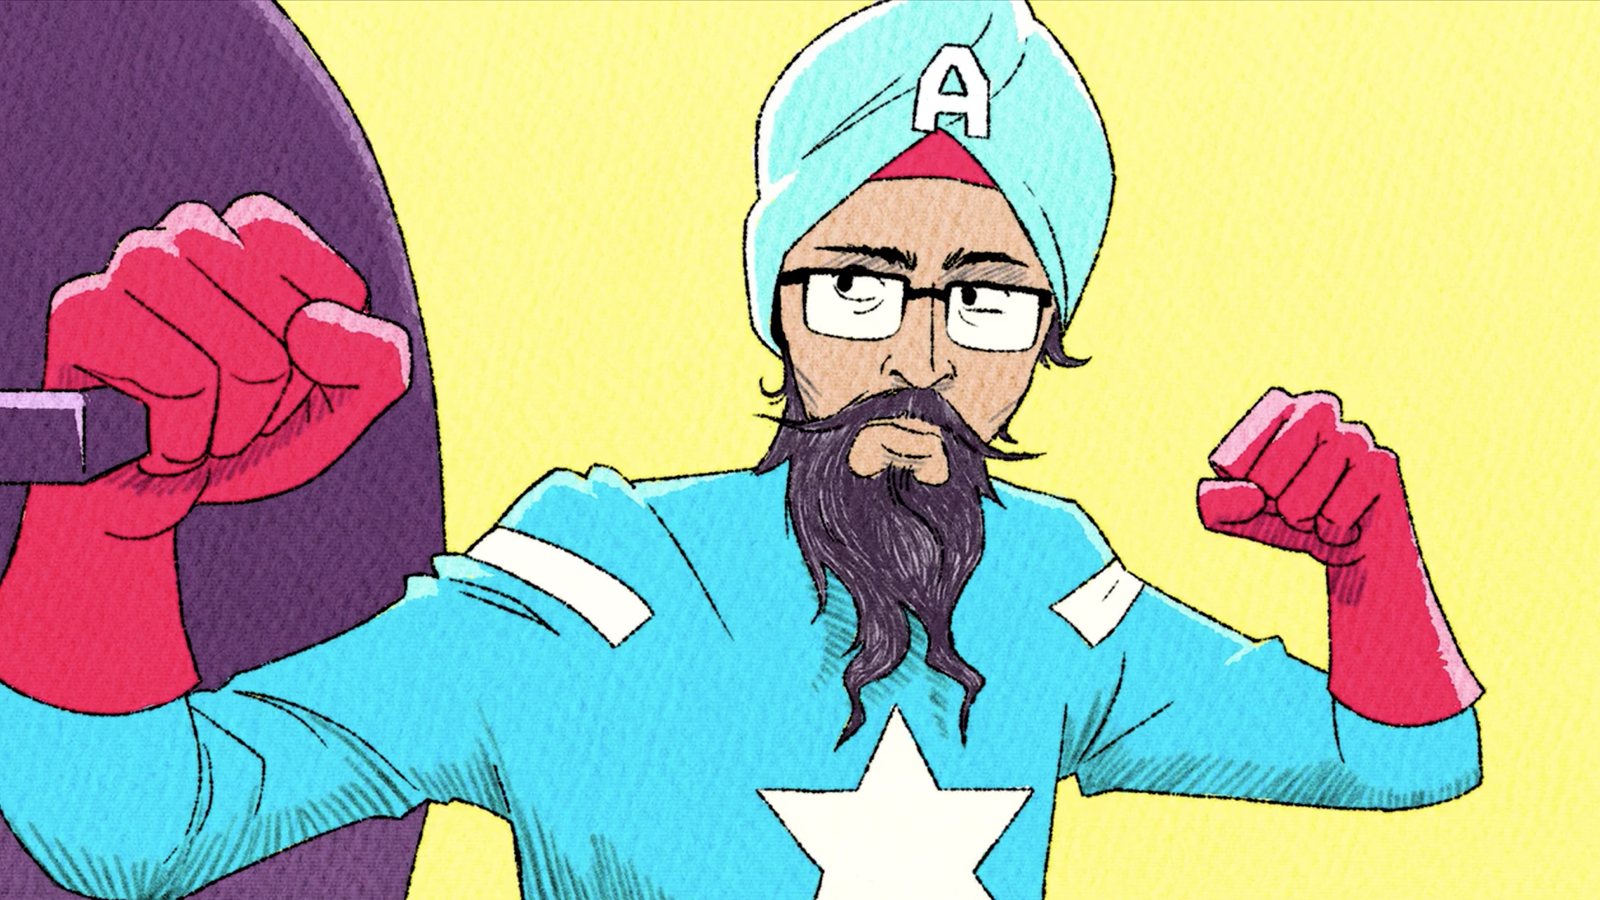 A still from “American Sikh” depicting Vishavjit Singh as his Captain America persona. Image via Kickstarter